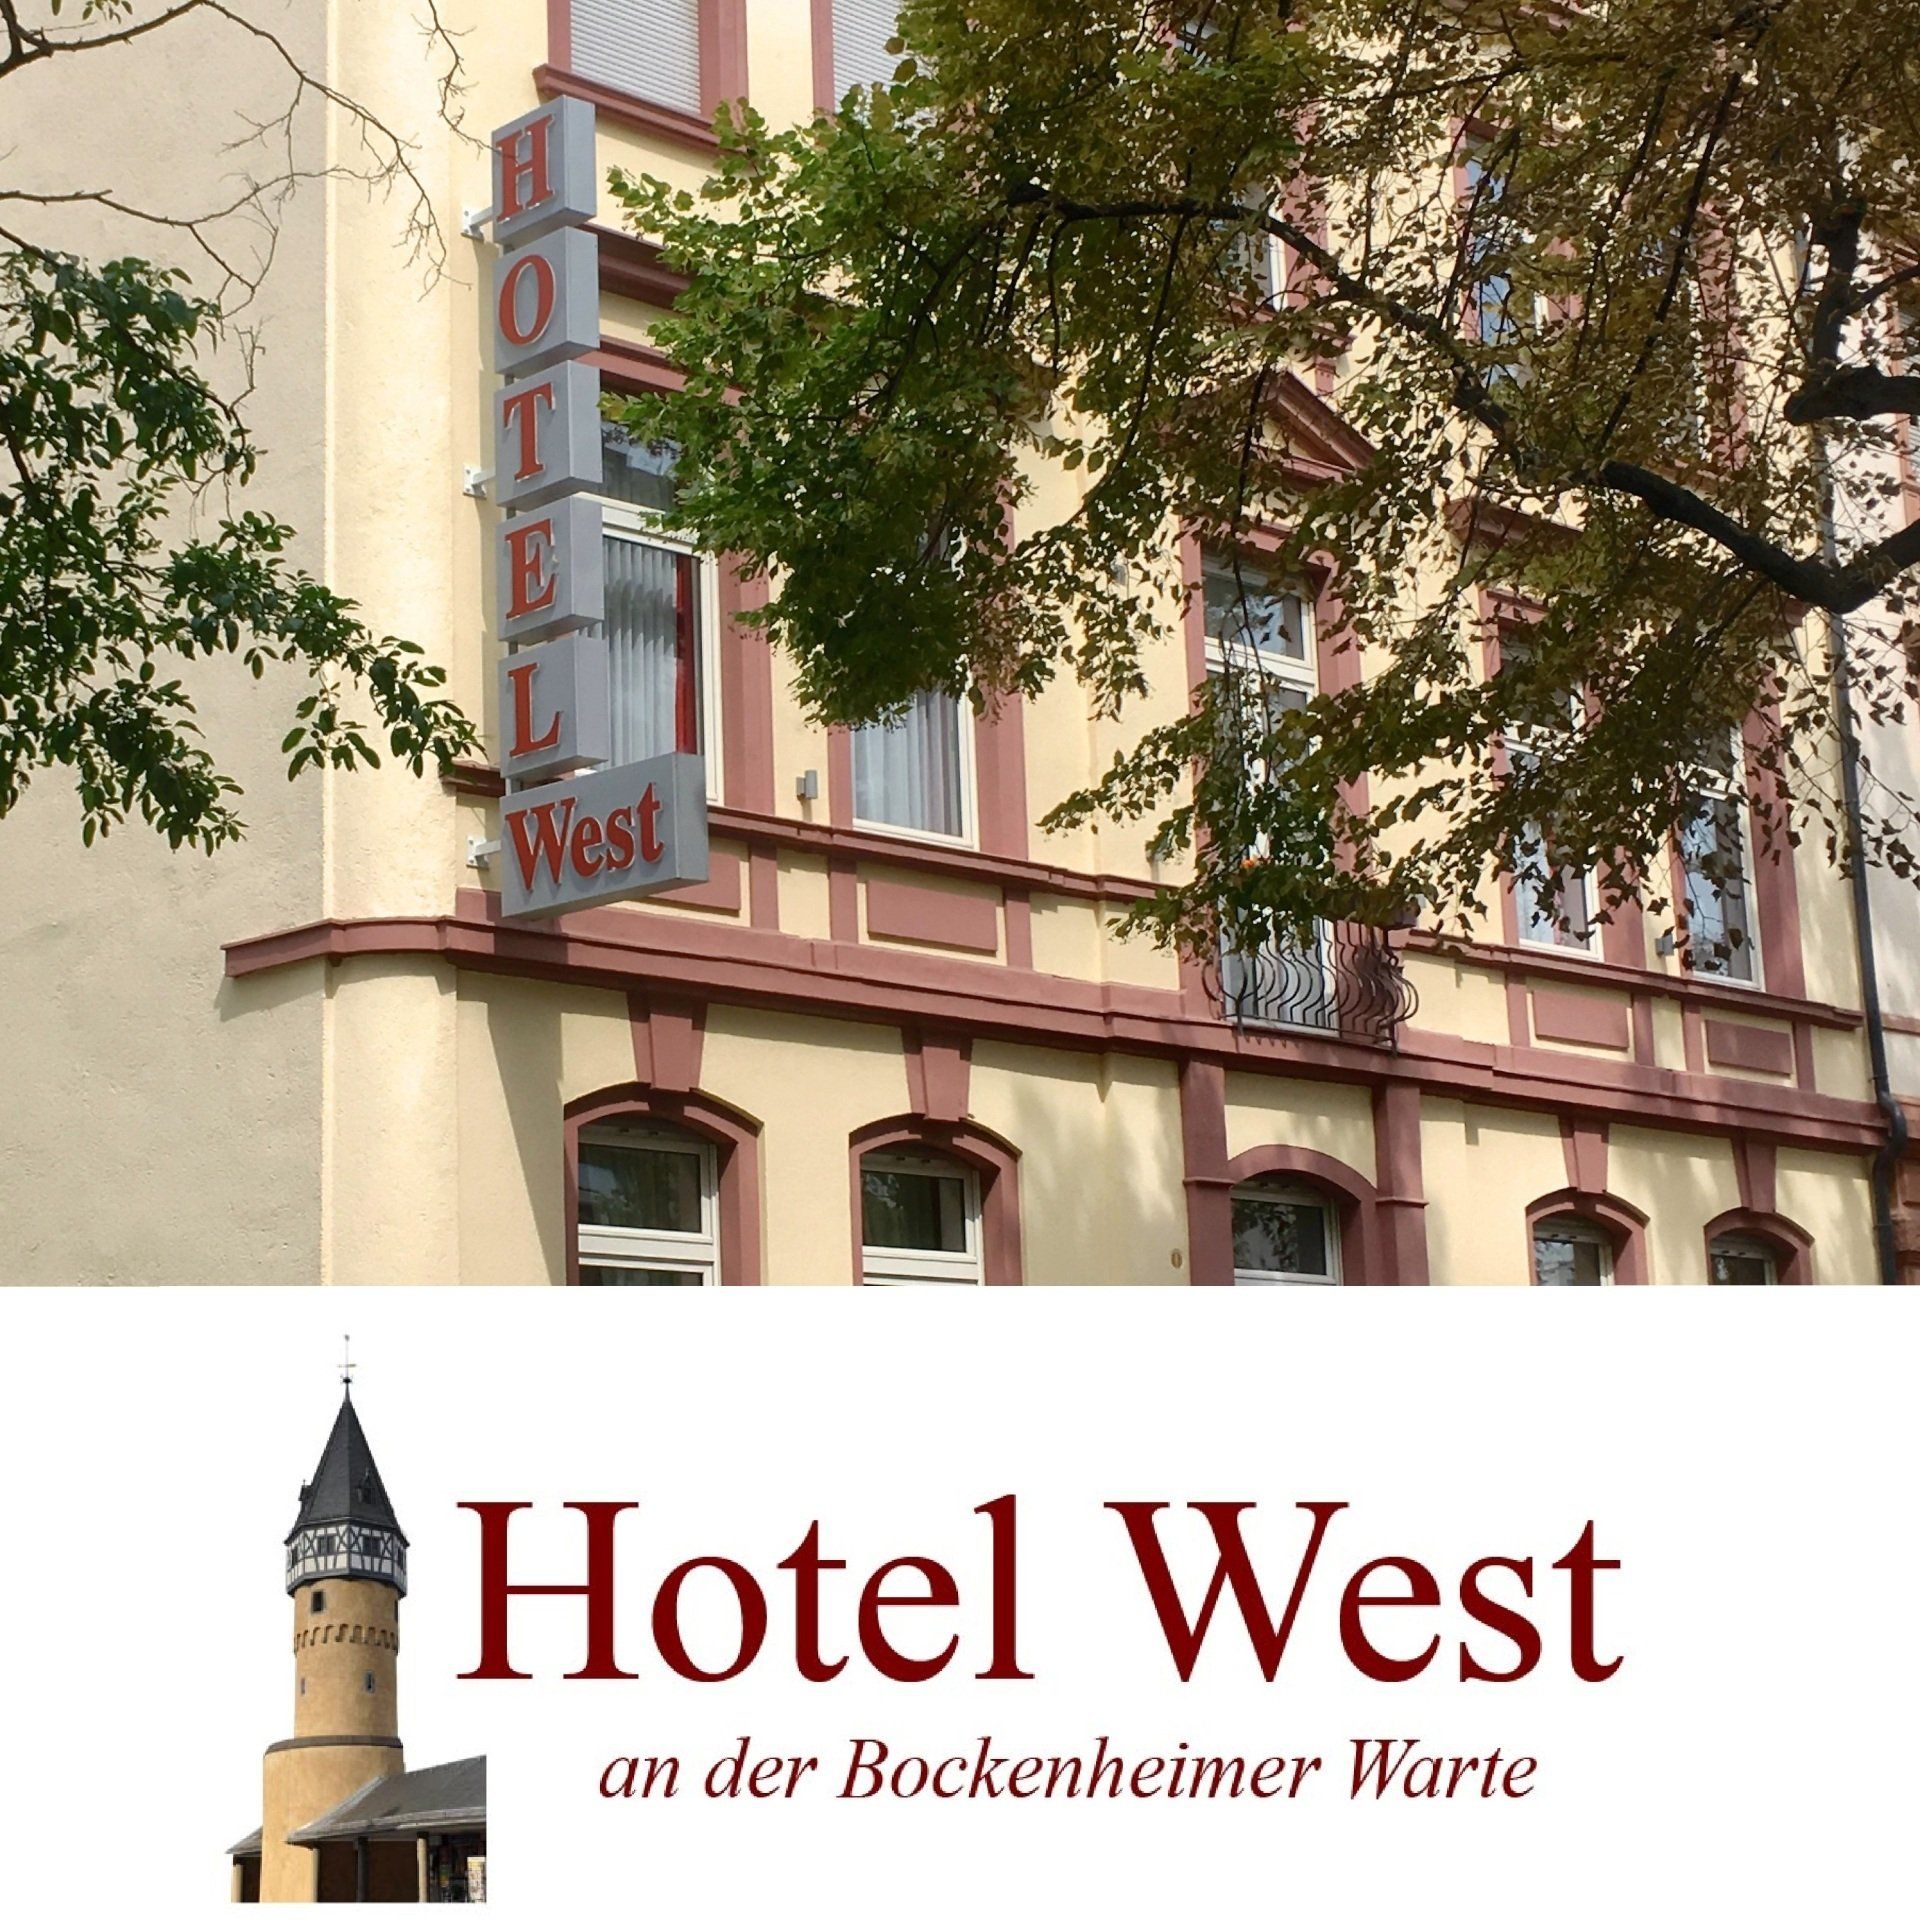 (c) Hotelwest.de